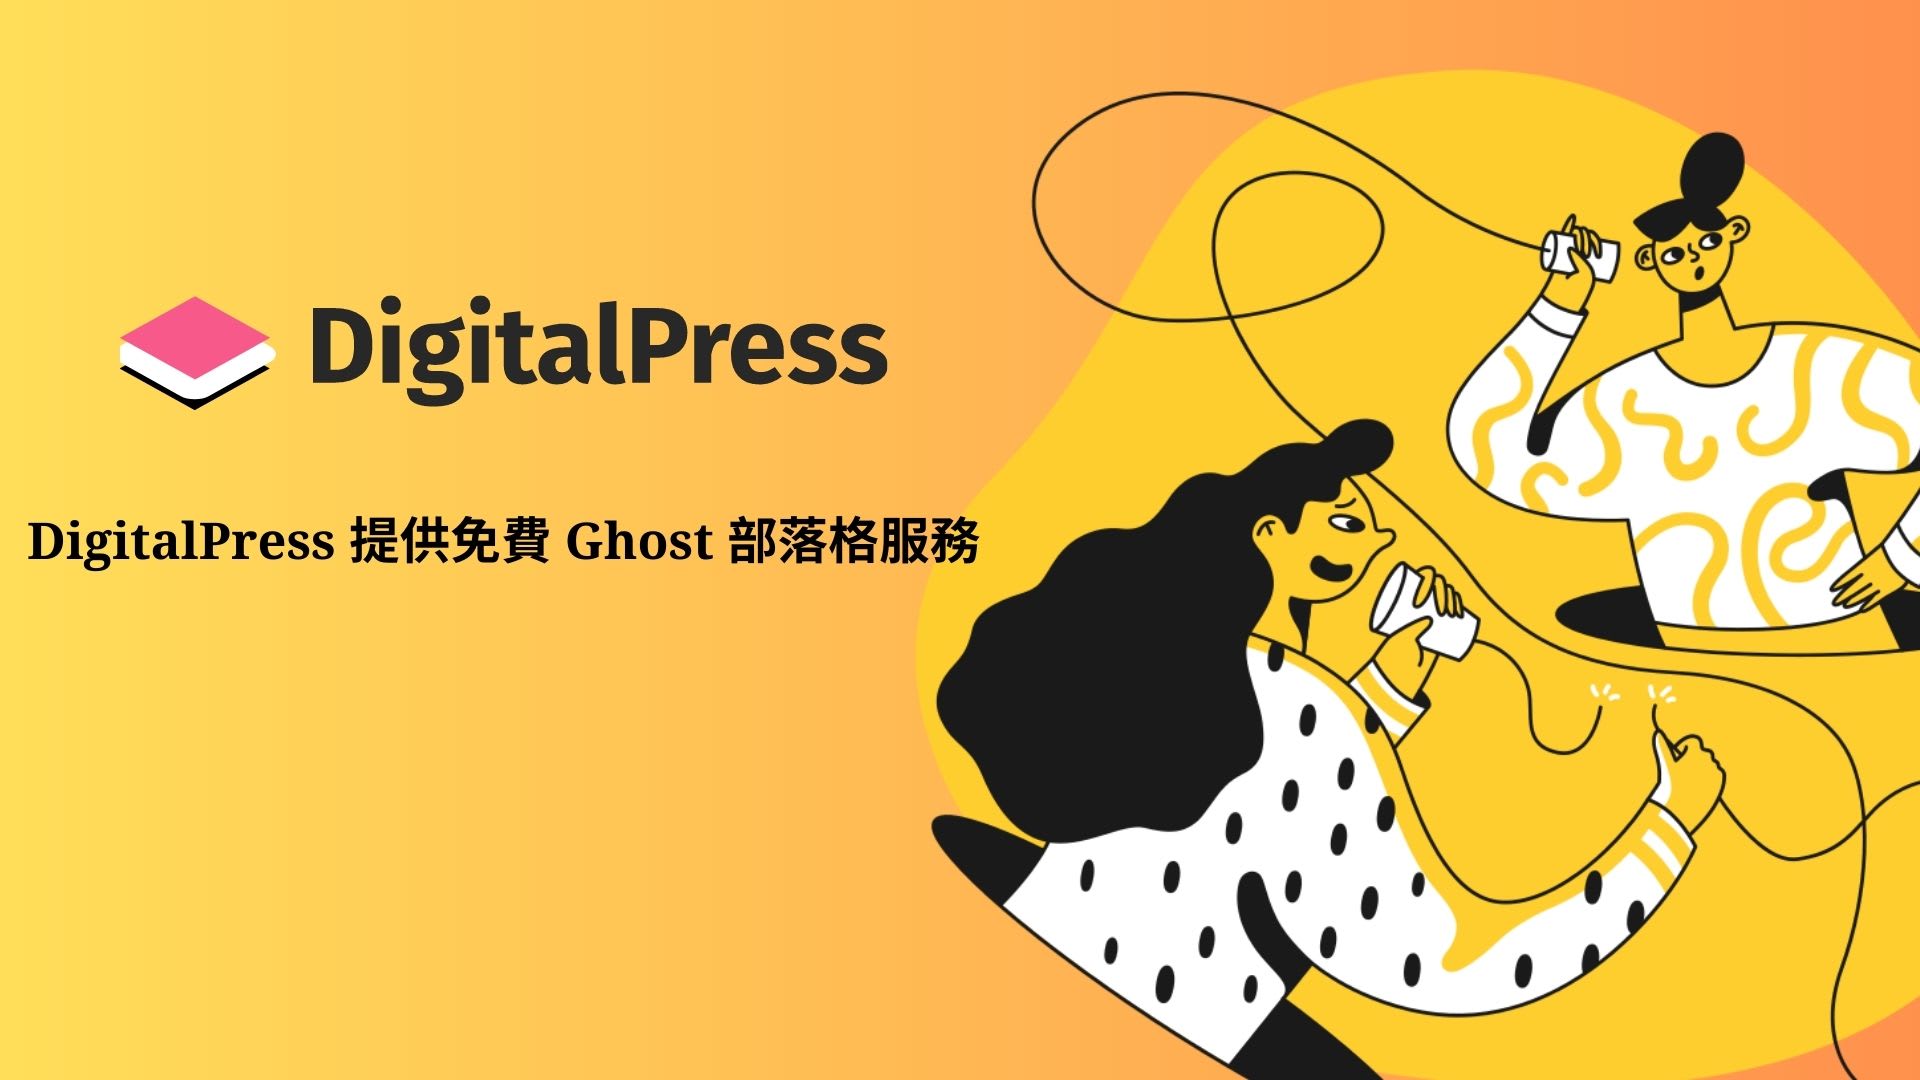 DigitalPress 提供免費 Ghost 部落格服務